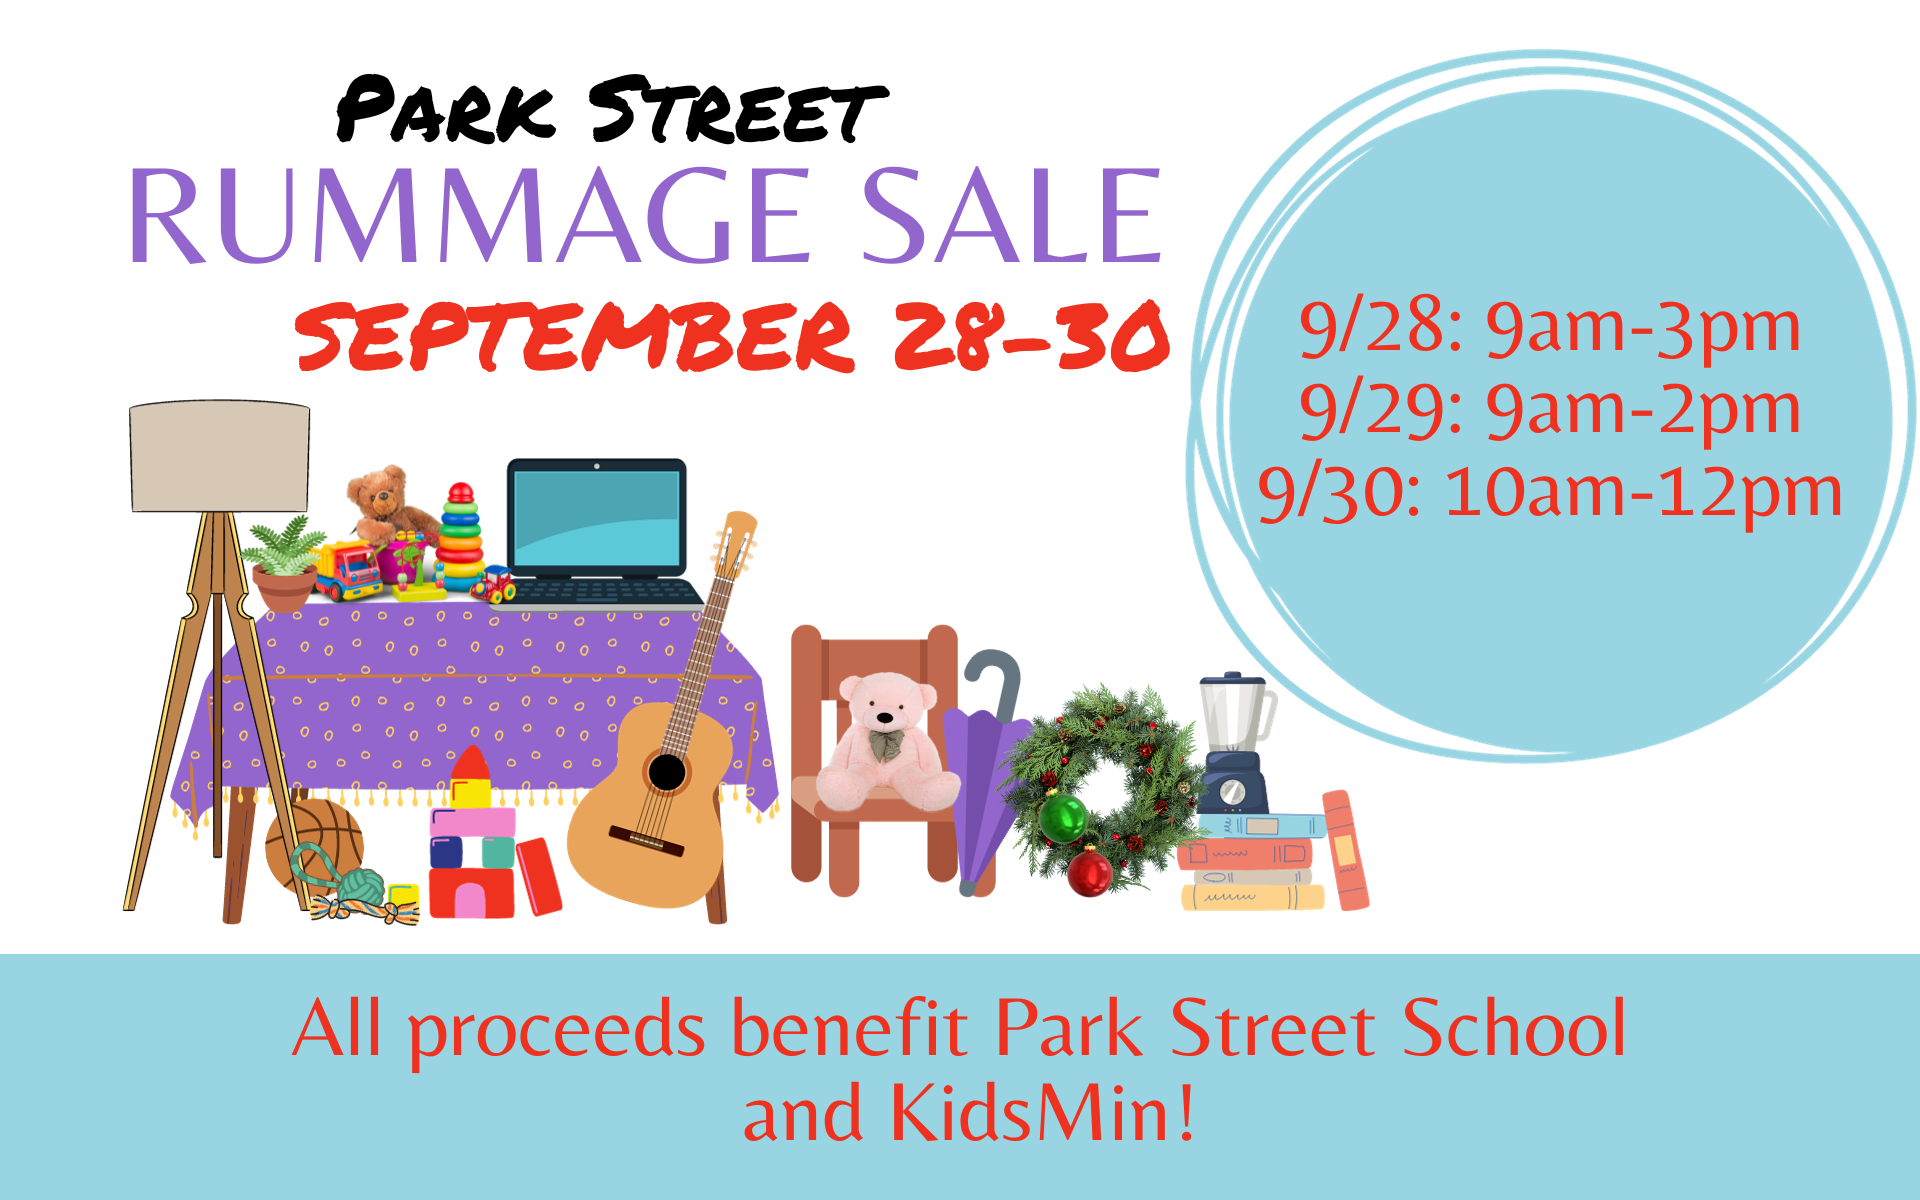 Rummage Sale to Benefit Park Street School and KidsMin